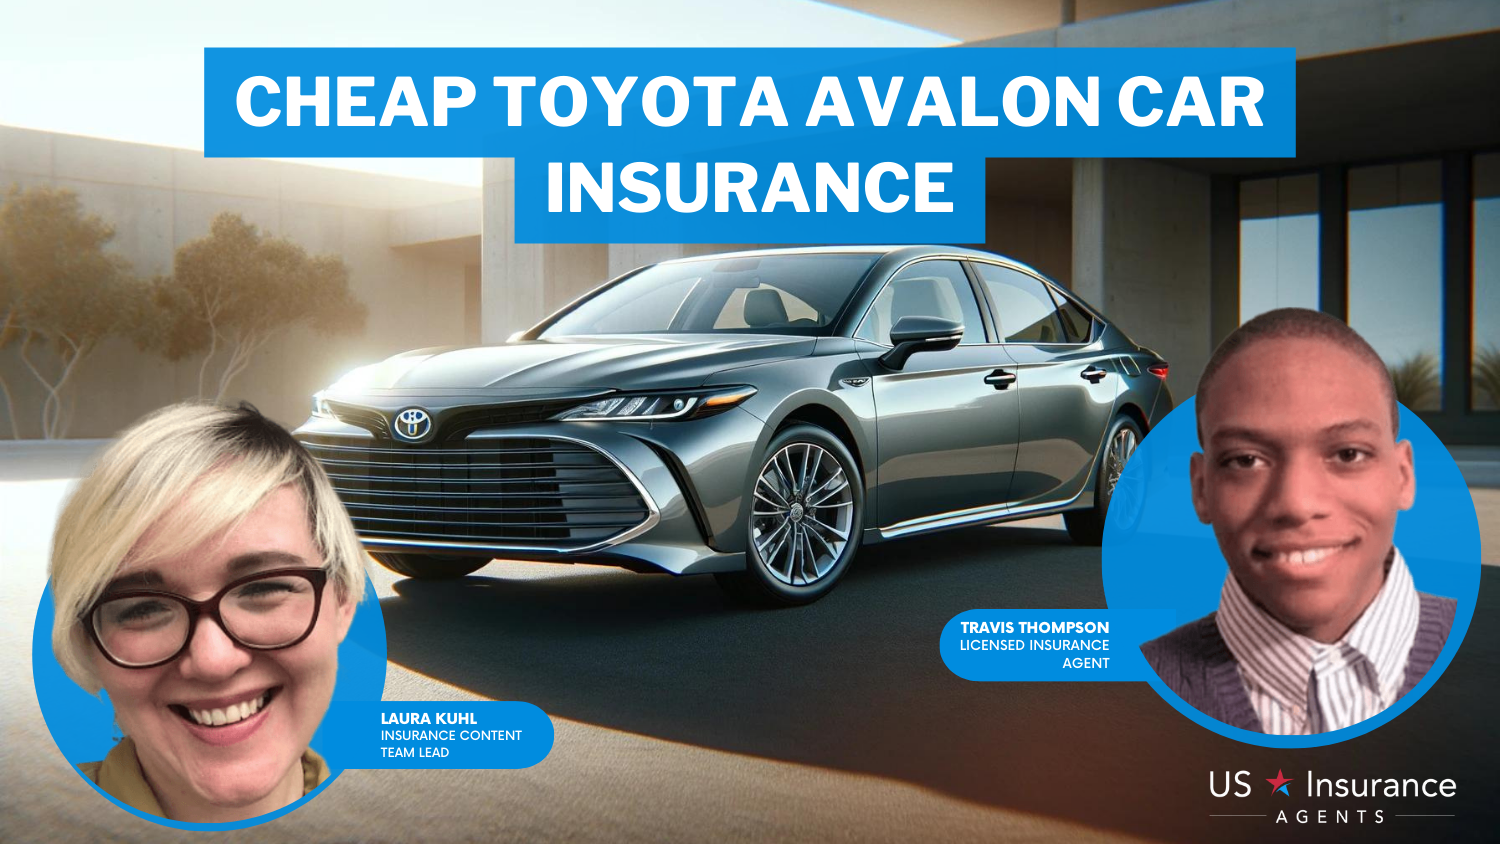 Cheap Toyota Avalon Car Insurance: Farmers, Progressive, and USAA